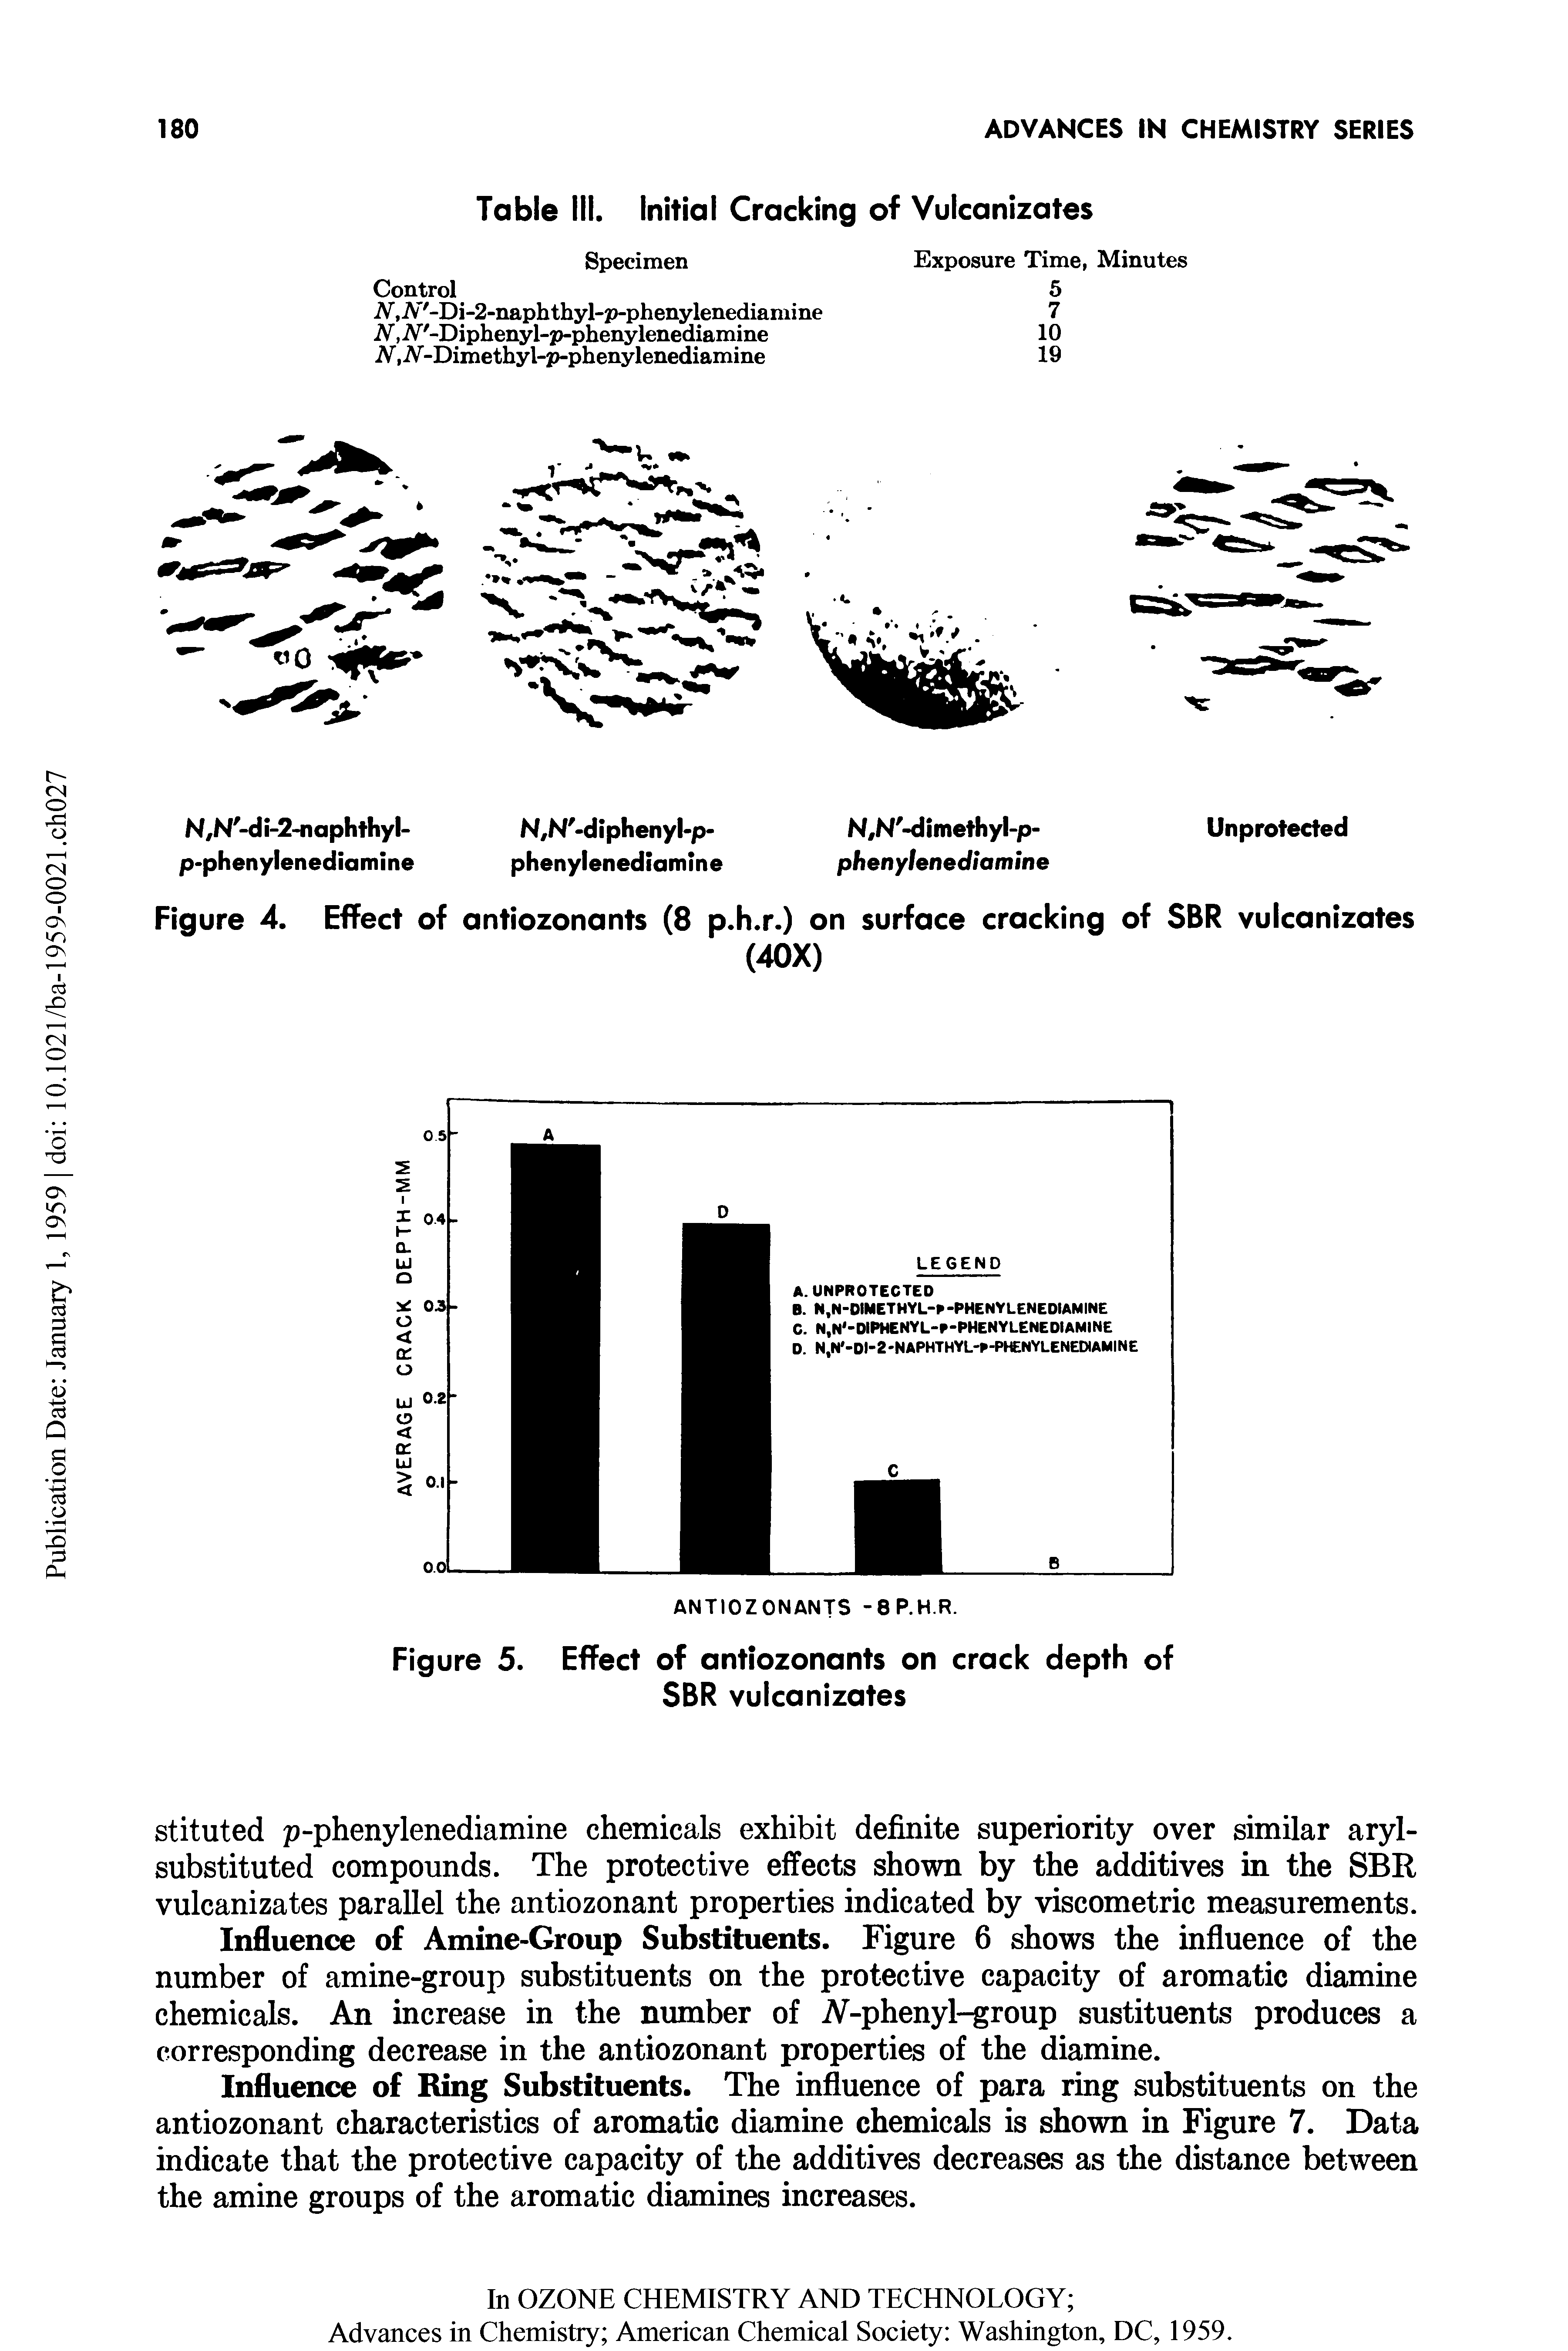 Figure 4. EfFect of antiozonants (8 p.h.r.) on surface cracking of SBR vulcanizates...